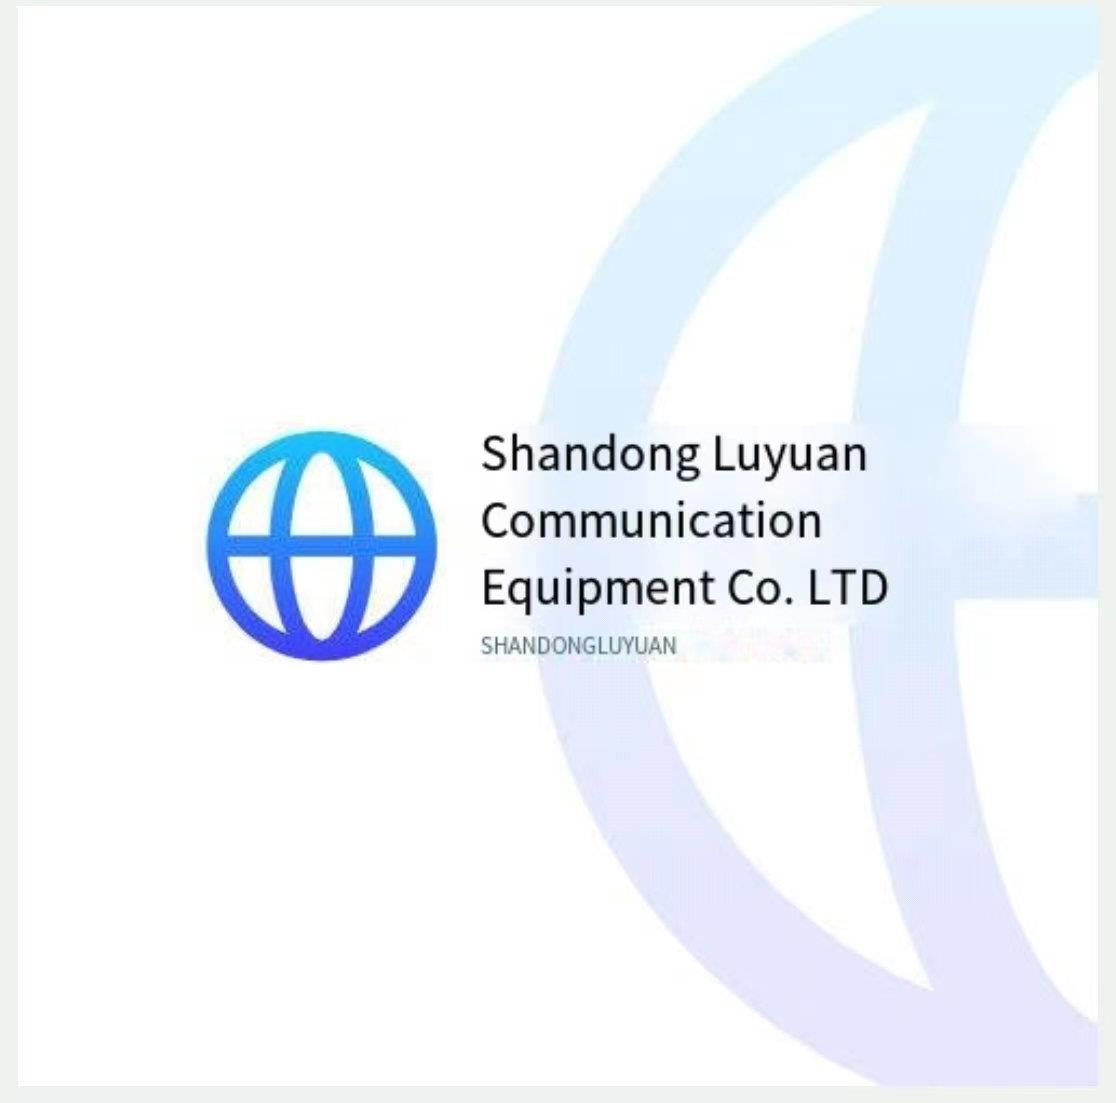 Shandong Luyuan Communication Equipment Co., Ltd